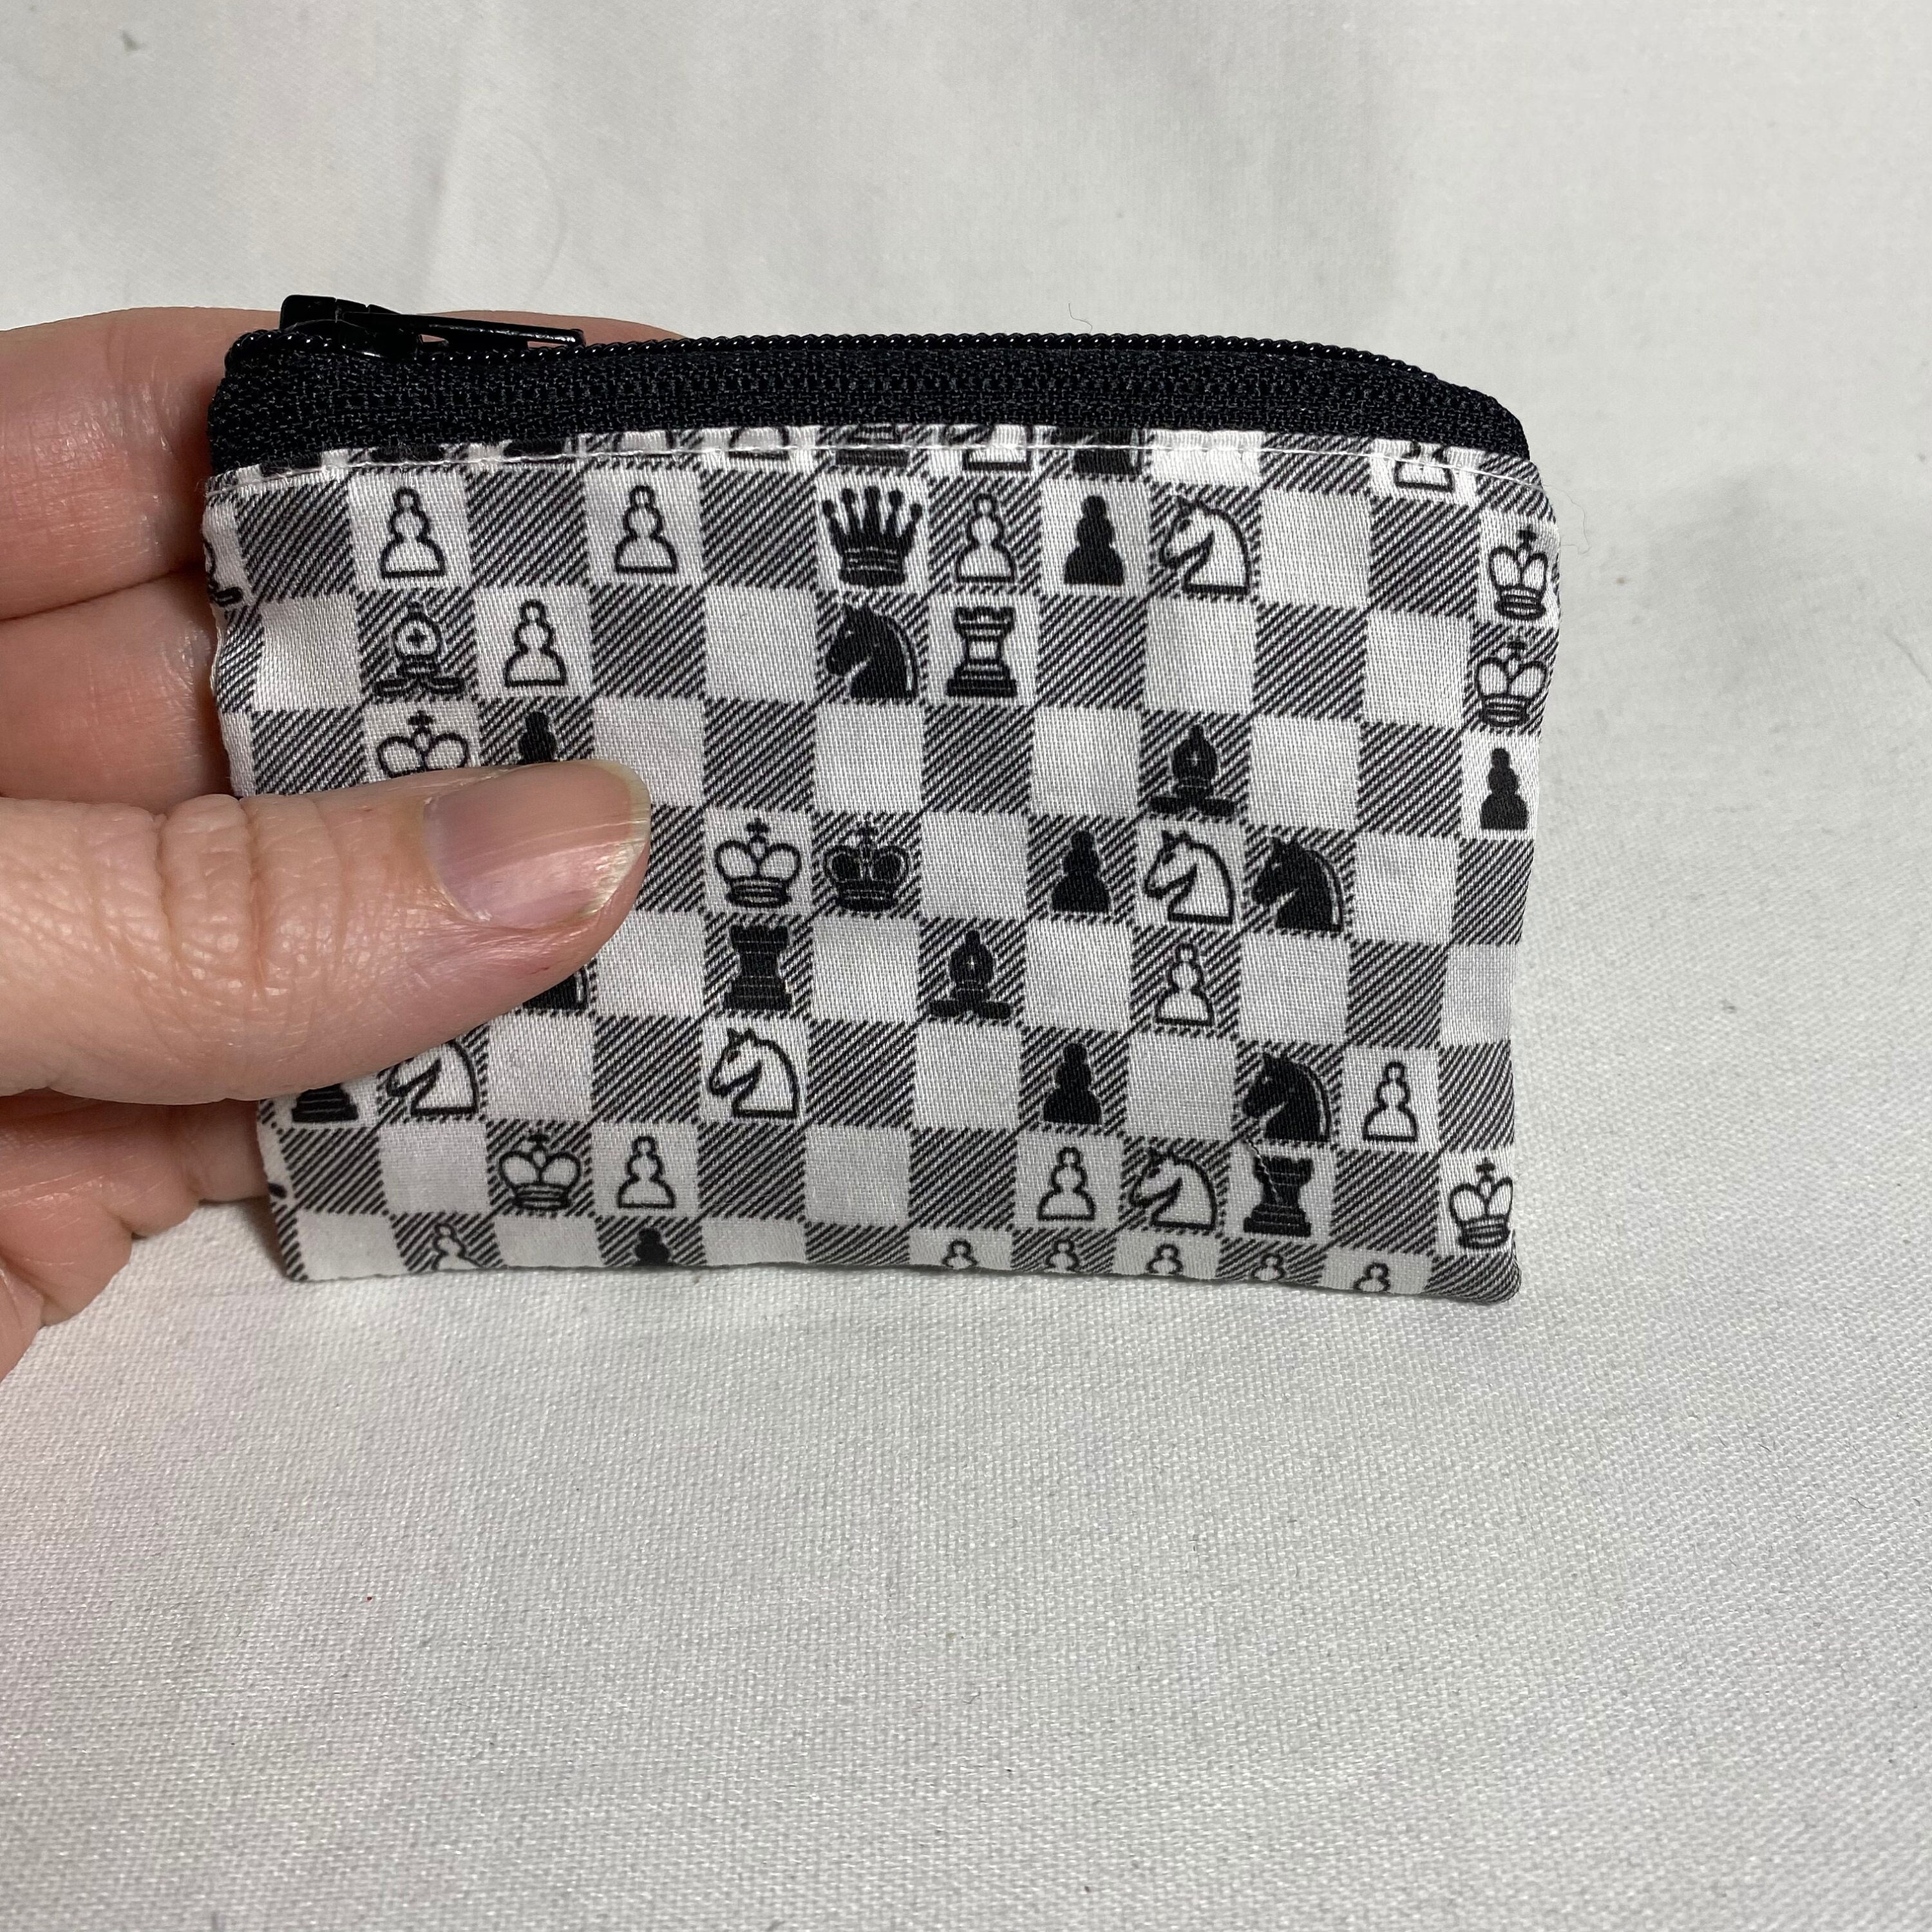  YQBUER Cartón de ajedrez retro para mujer, bolsos de